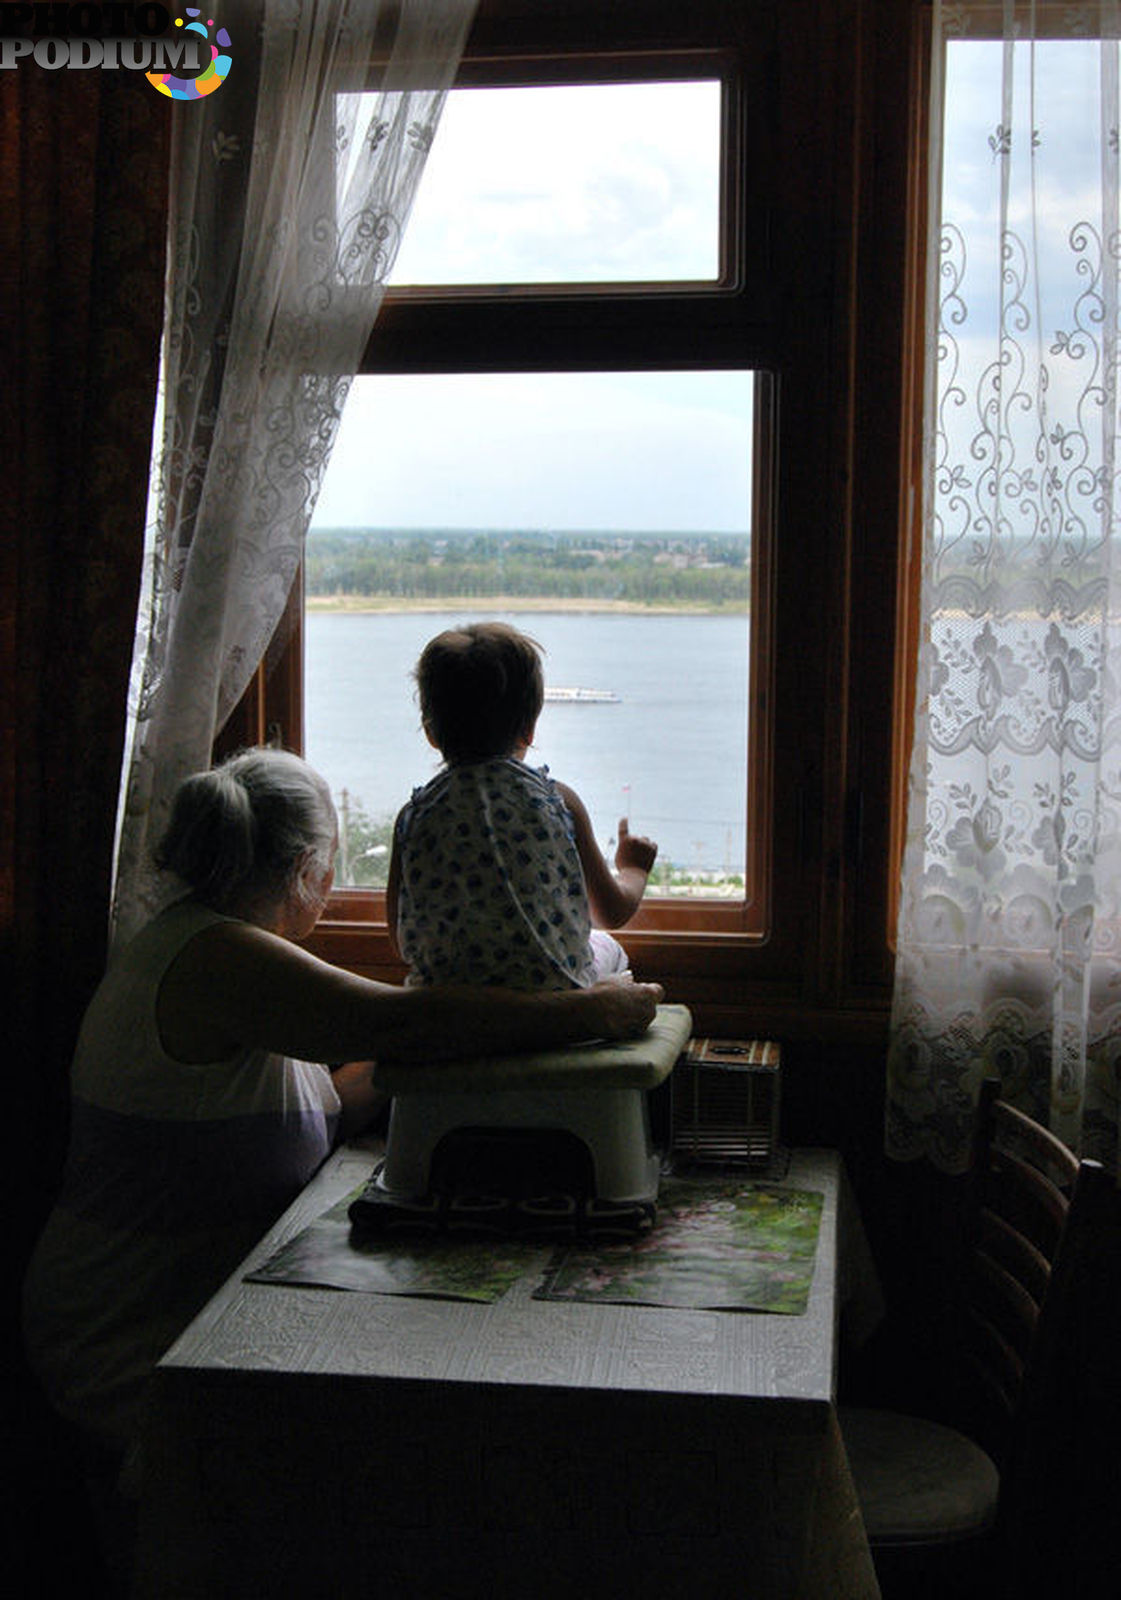 Окна тетка. Мама у окна. Бабушка в окошке. Бабуля у окна. Старуха у окна.